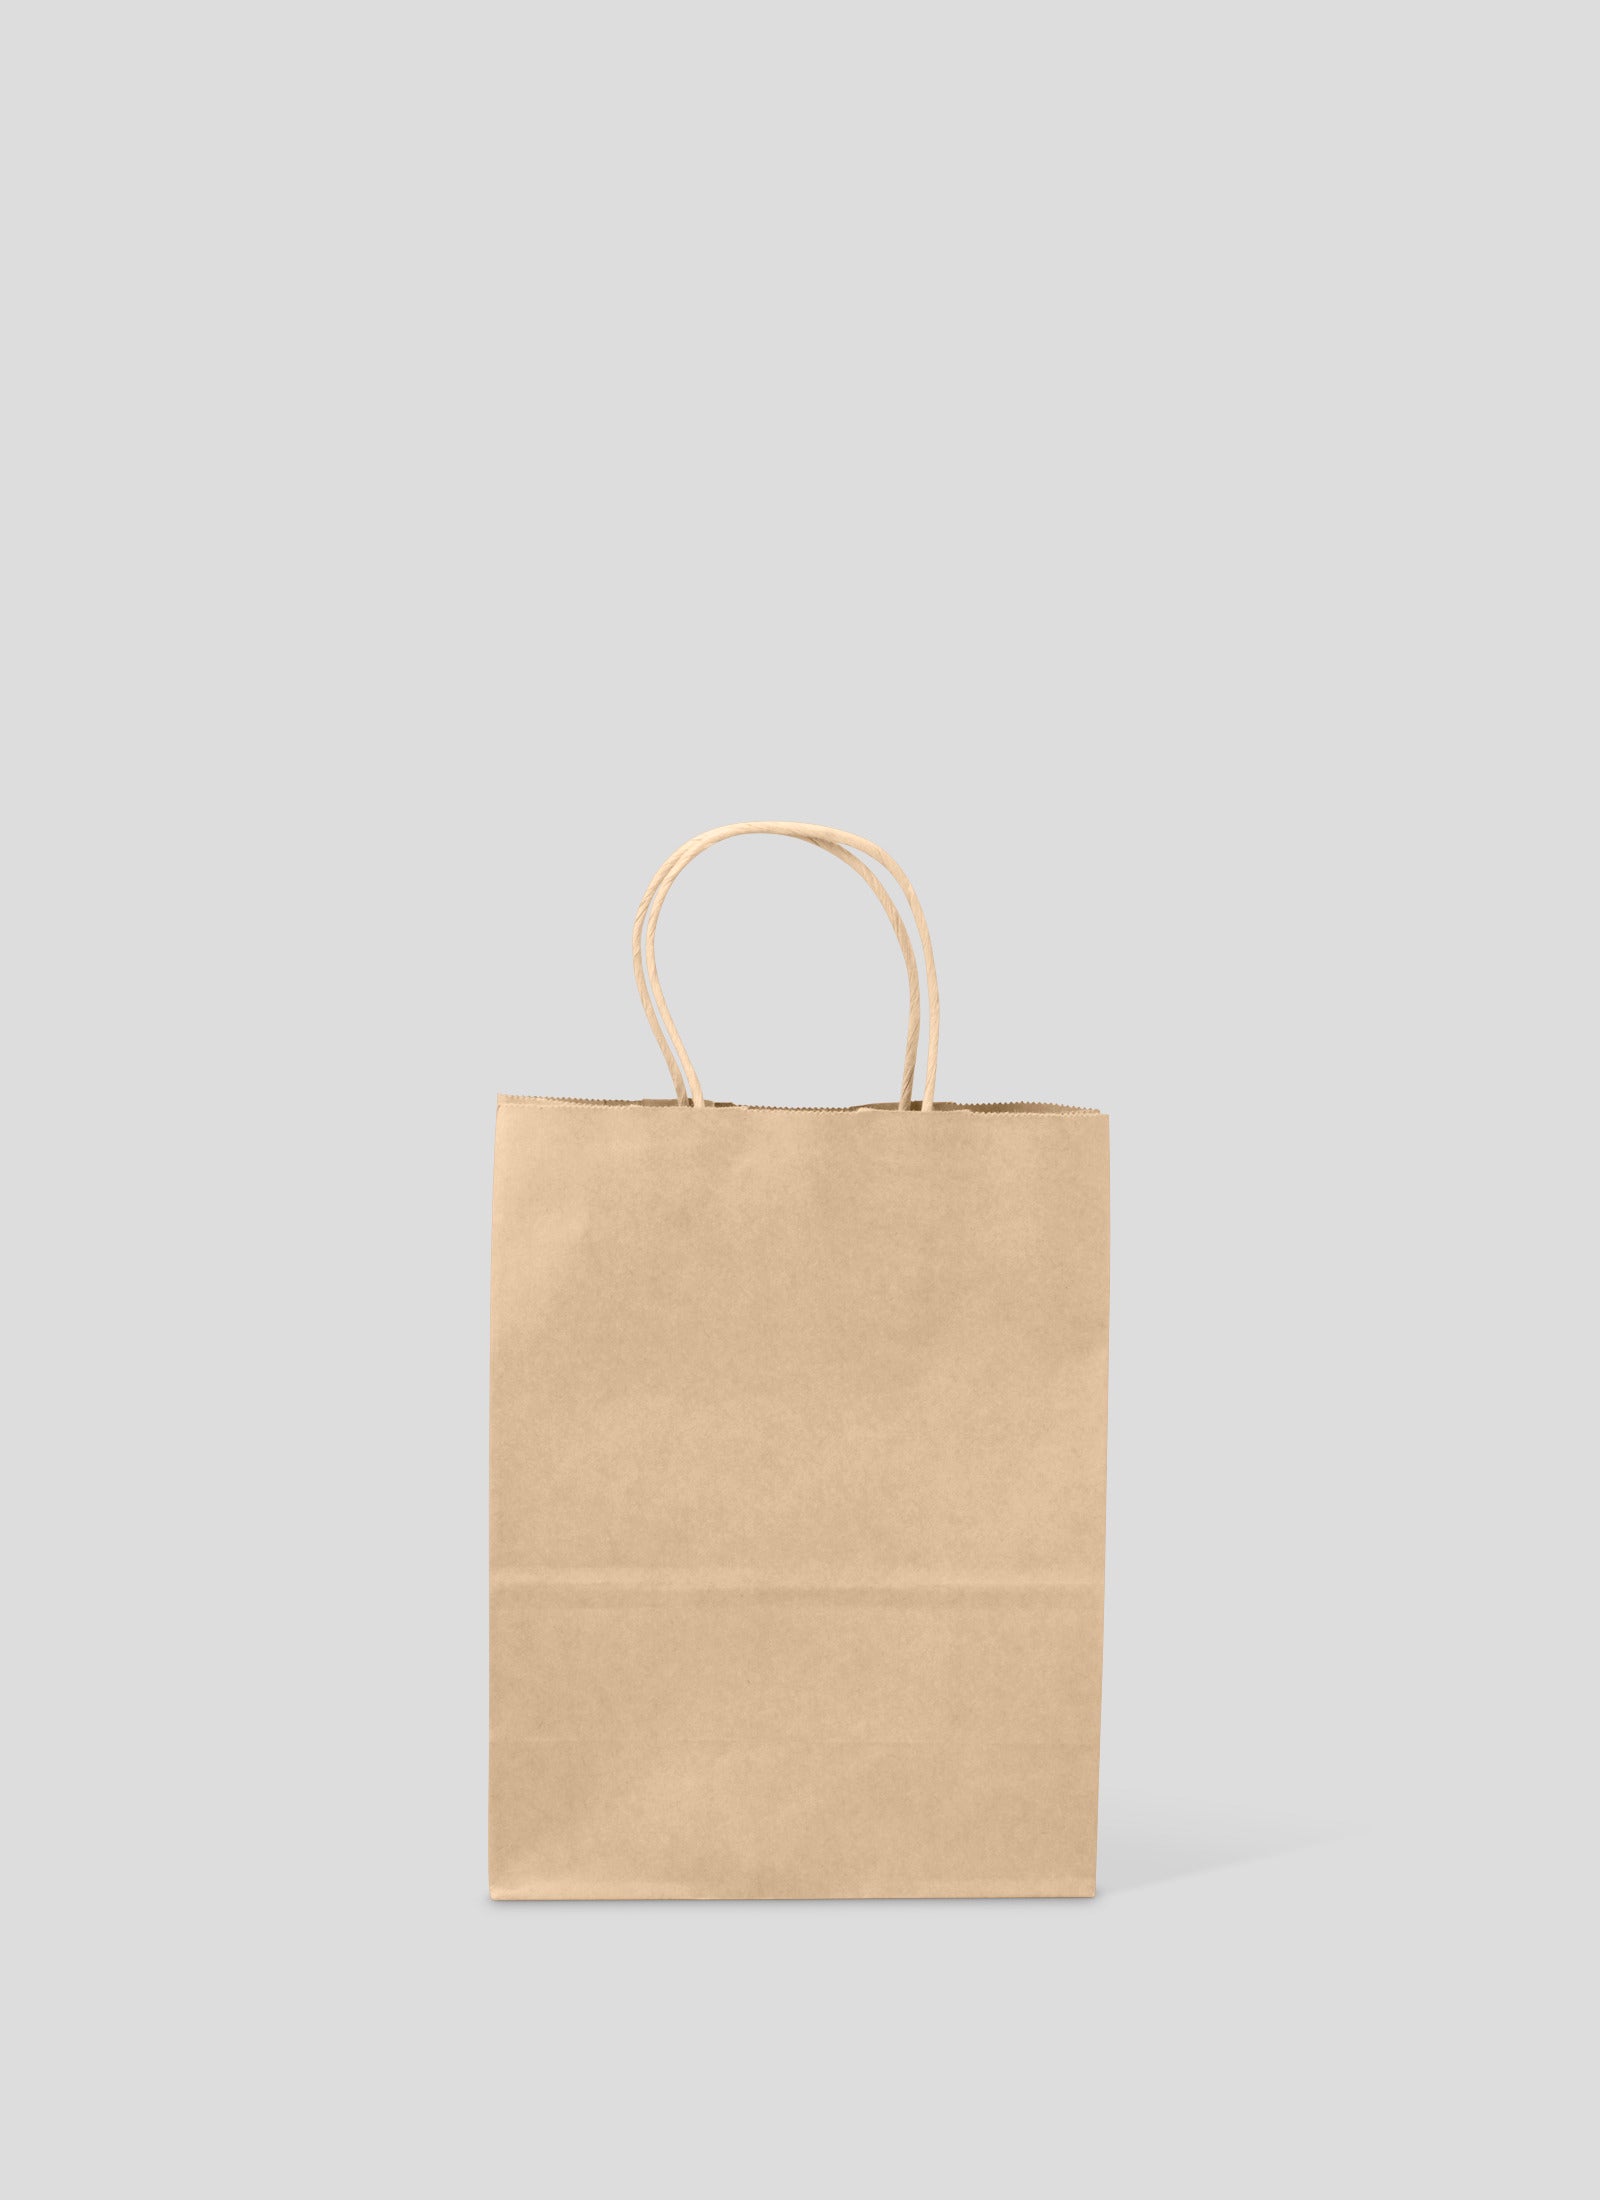 Medium Bistro Bags - Front View - Soyle 